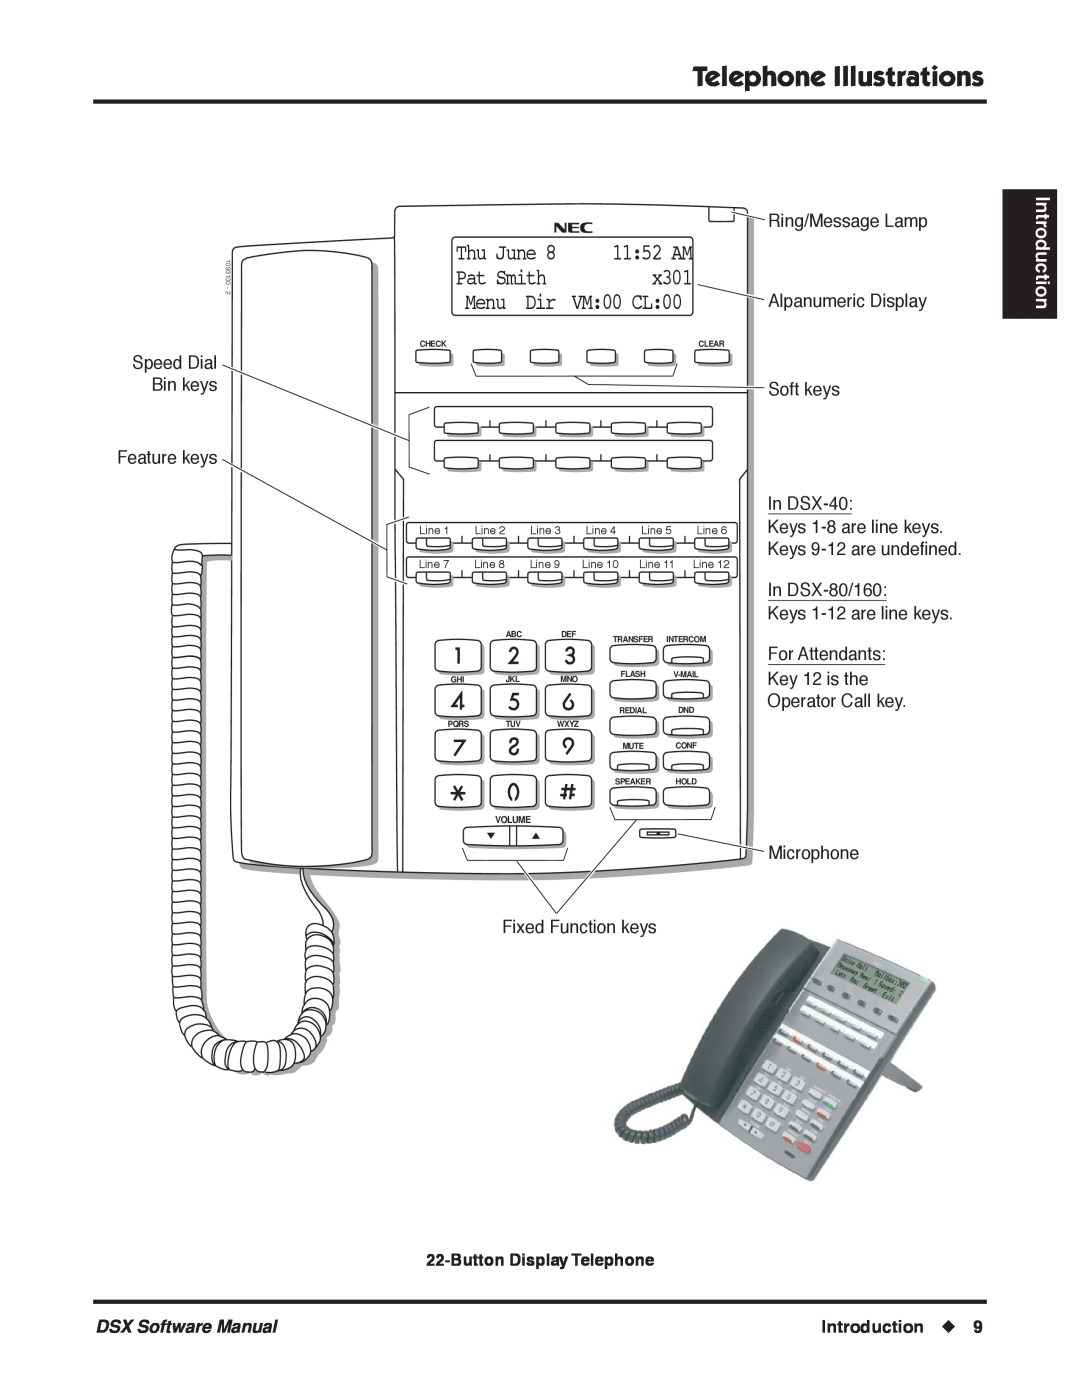 NEC Telephone Illustrations, Menu Dir, Thu June, Pat Smith, Speed Dial Bin keys Feature keys, Alpanumeric Display, x301 